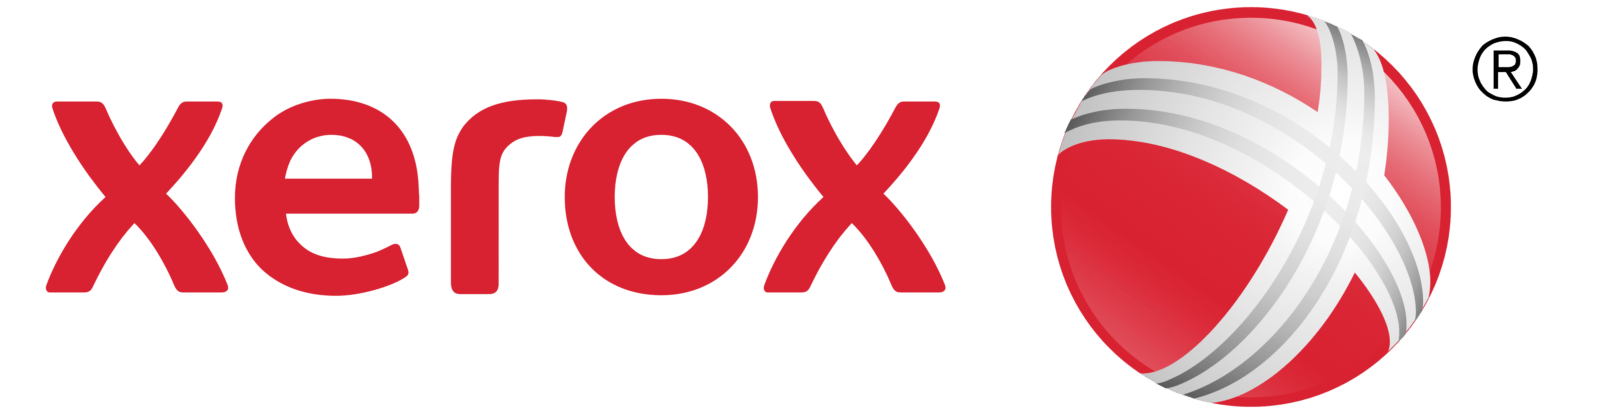 Xerox program logo